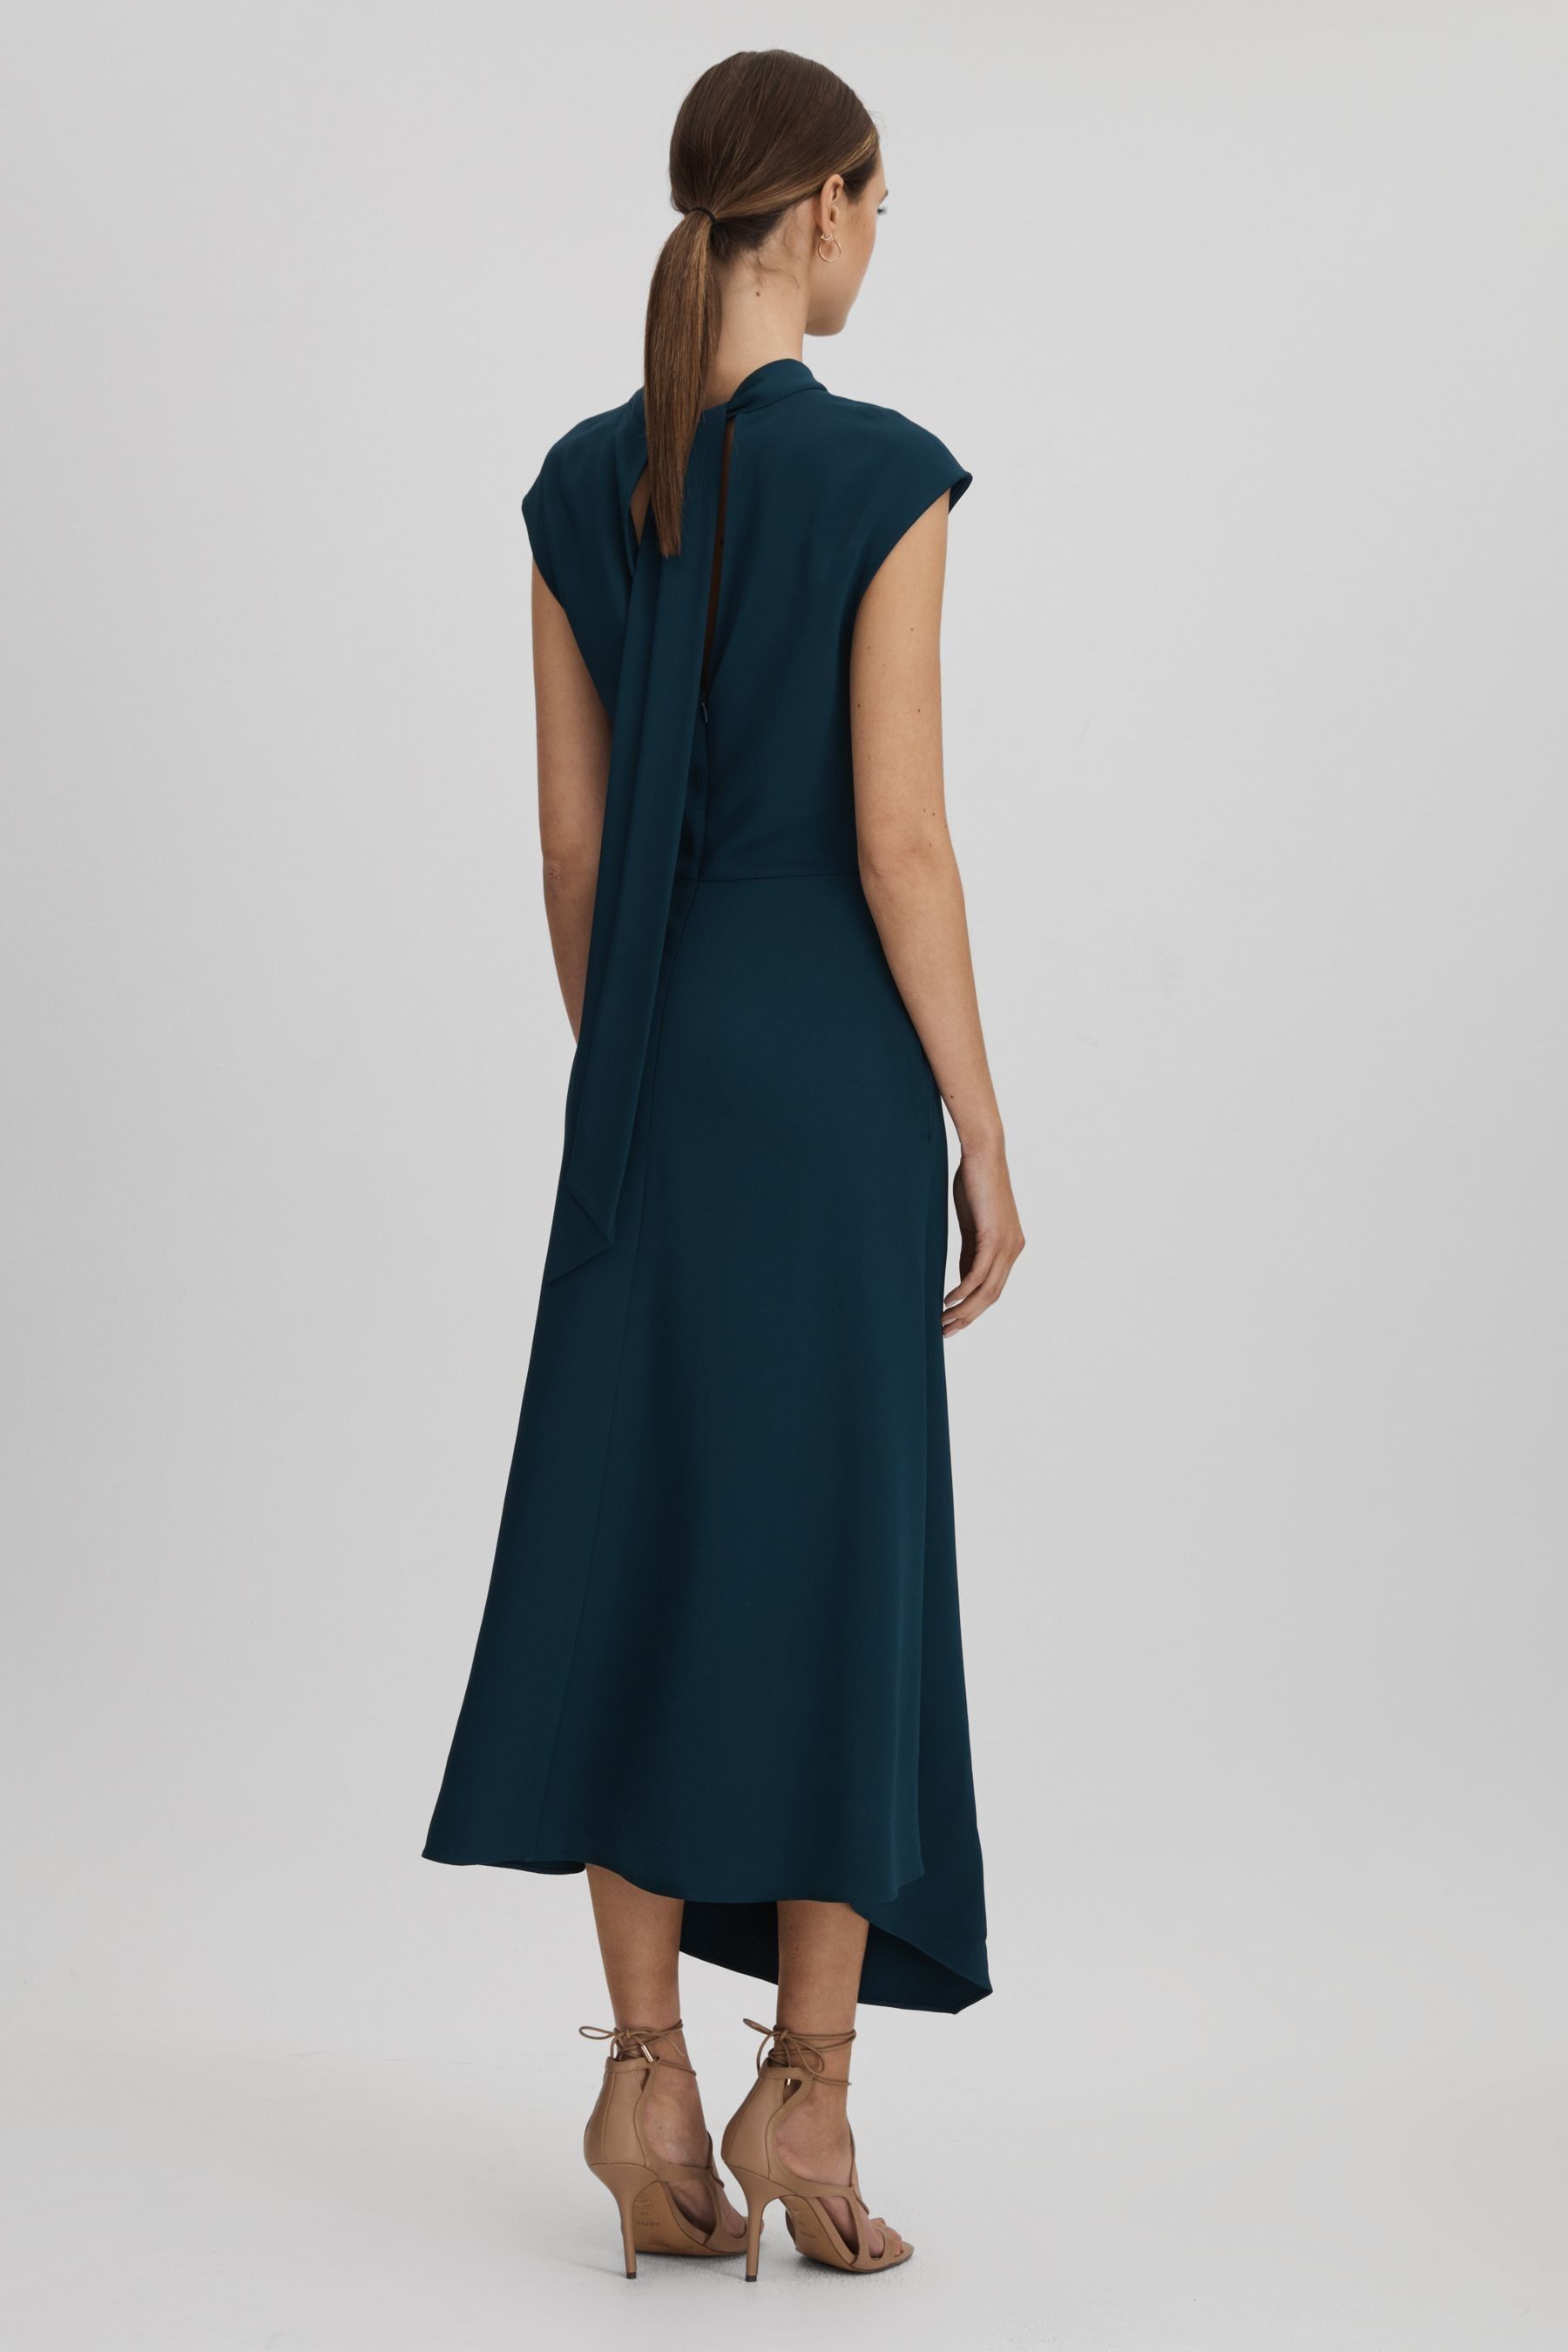 Buy Reiss Jessa Ruched Midi Dress from Next USA